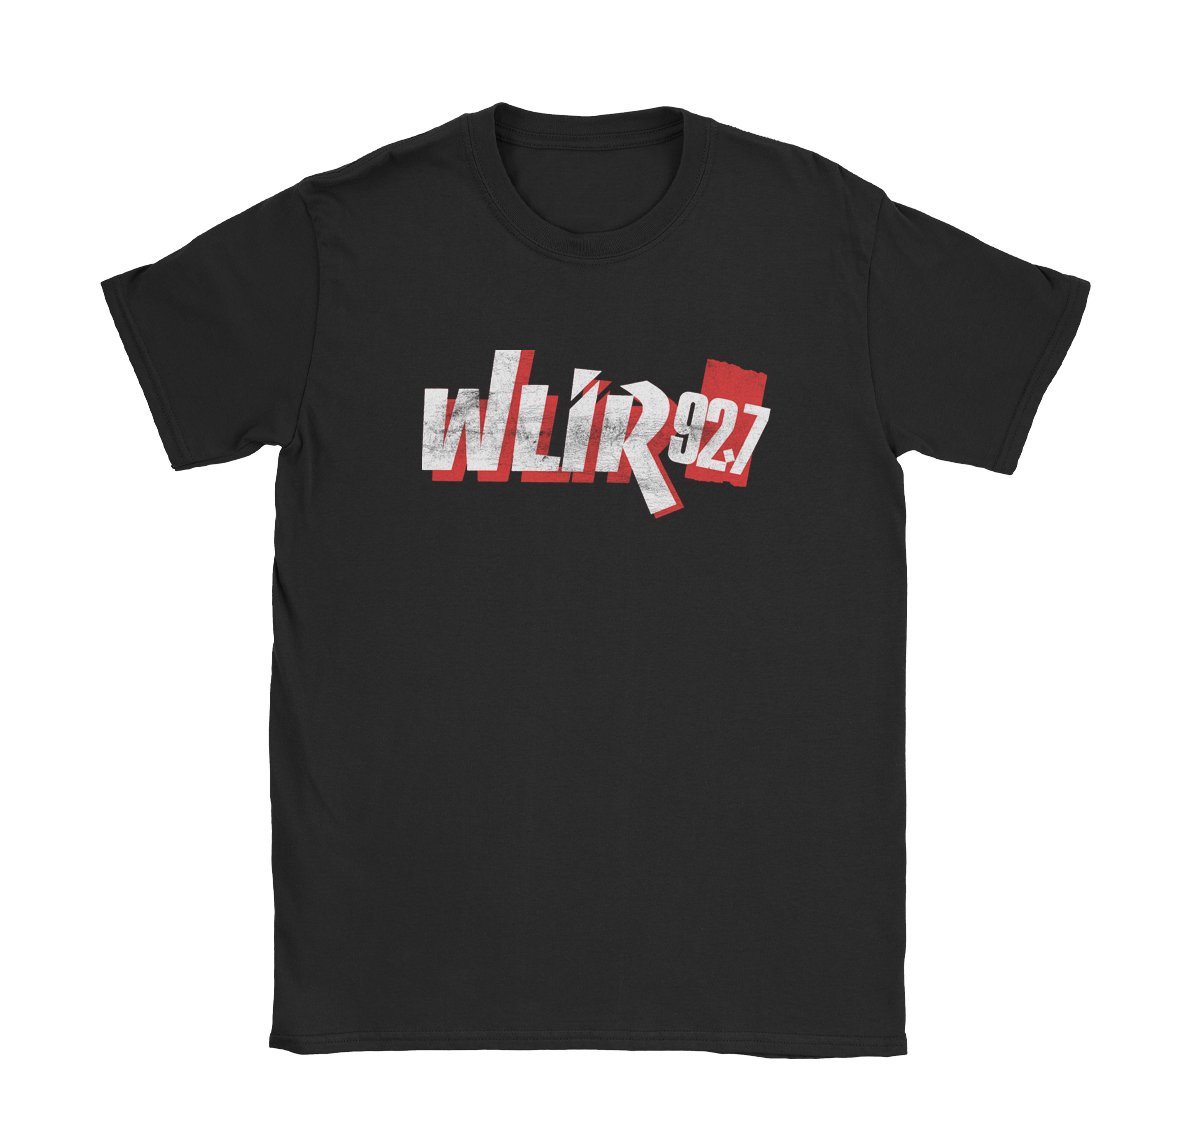 WLIR 92.7 - Black Cat MFG - T-Shirt